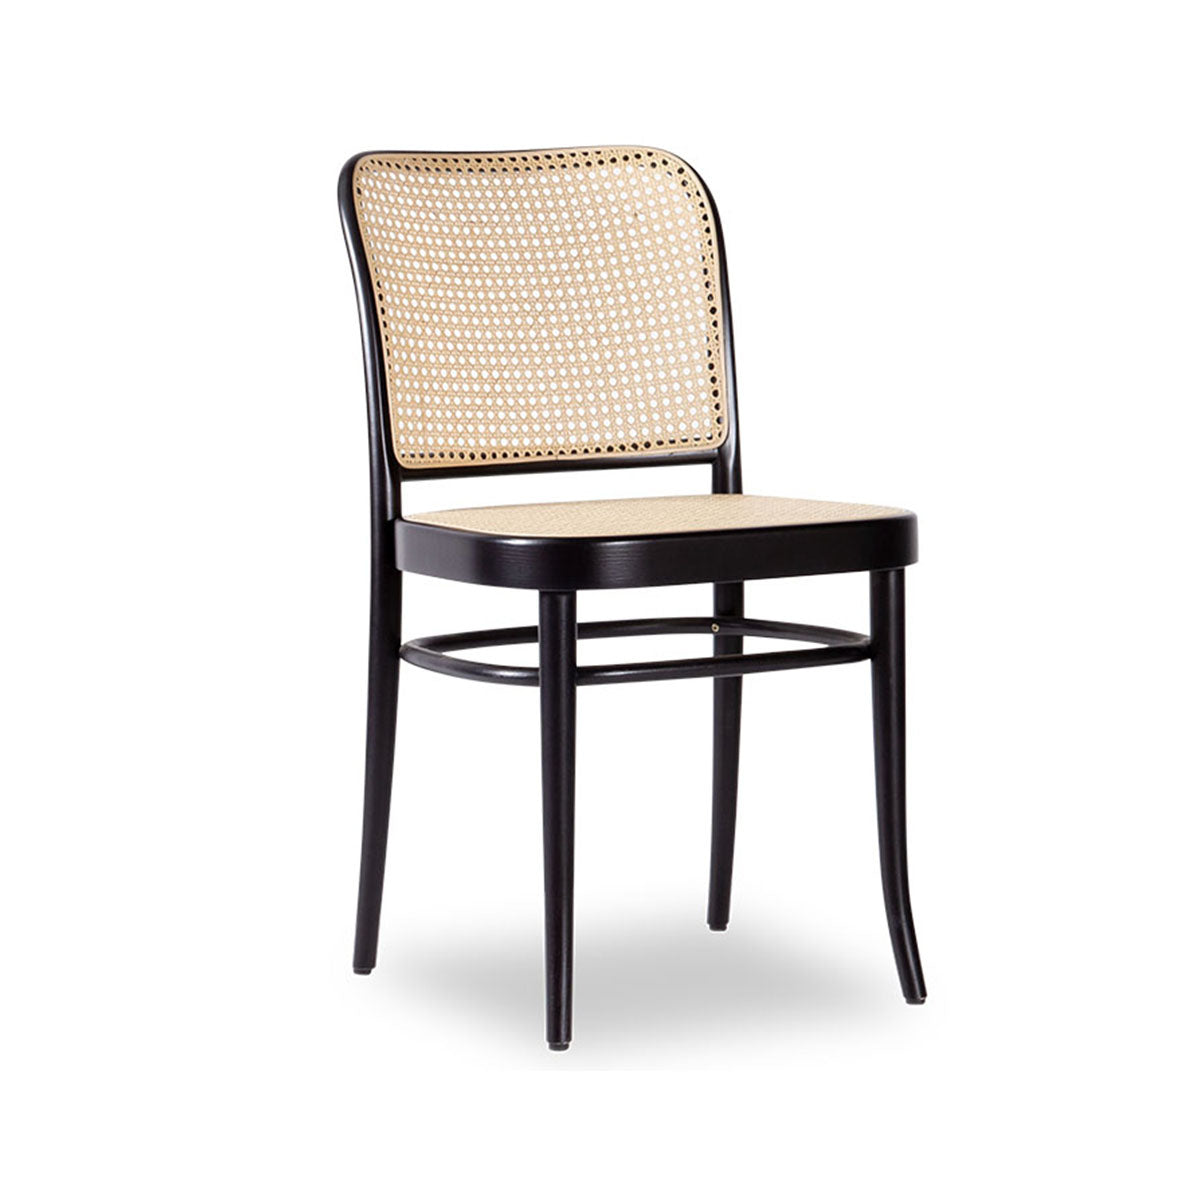 811 Hoffmann Chair - Cane Seat/Cane Backrest (Black Stain).